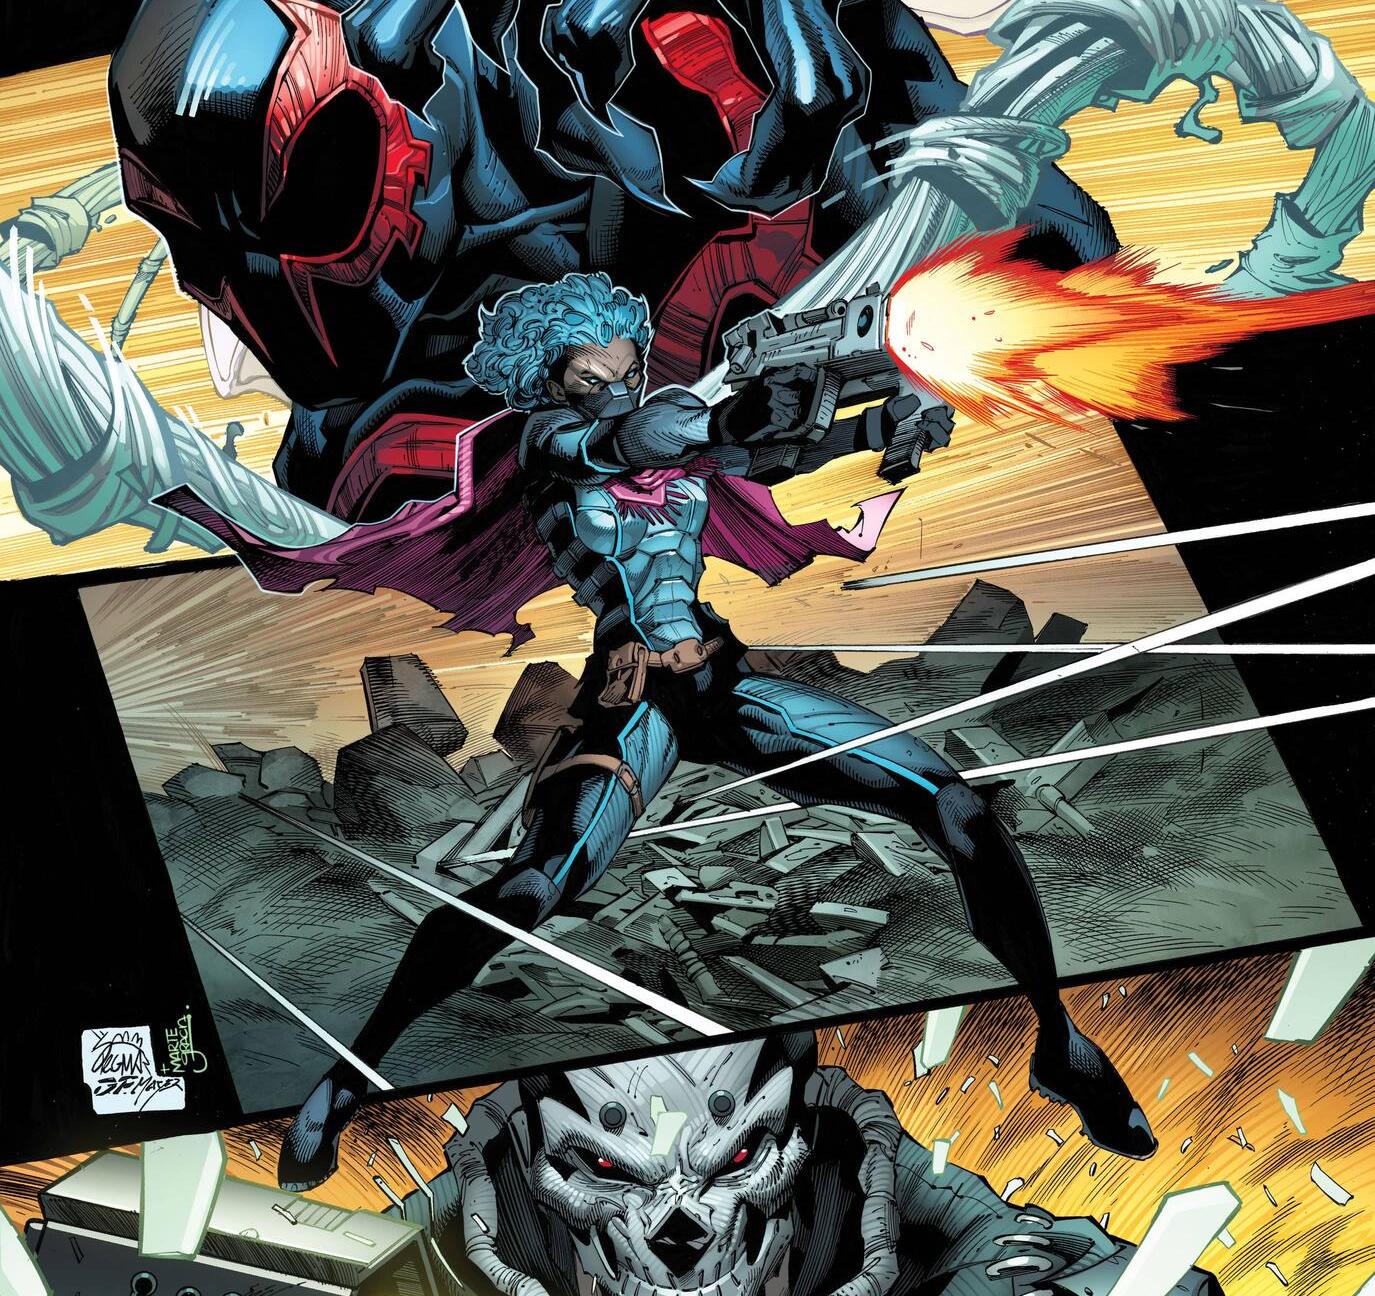 'Spider-Man 2099: Exodus' #1 blends hero origin story and techno-futurism